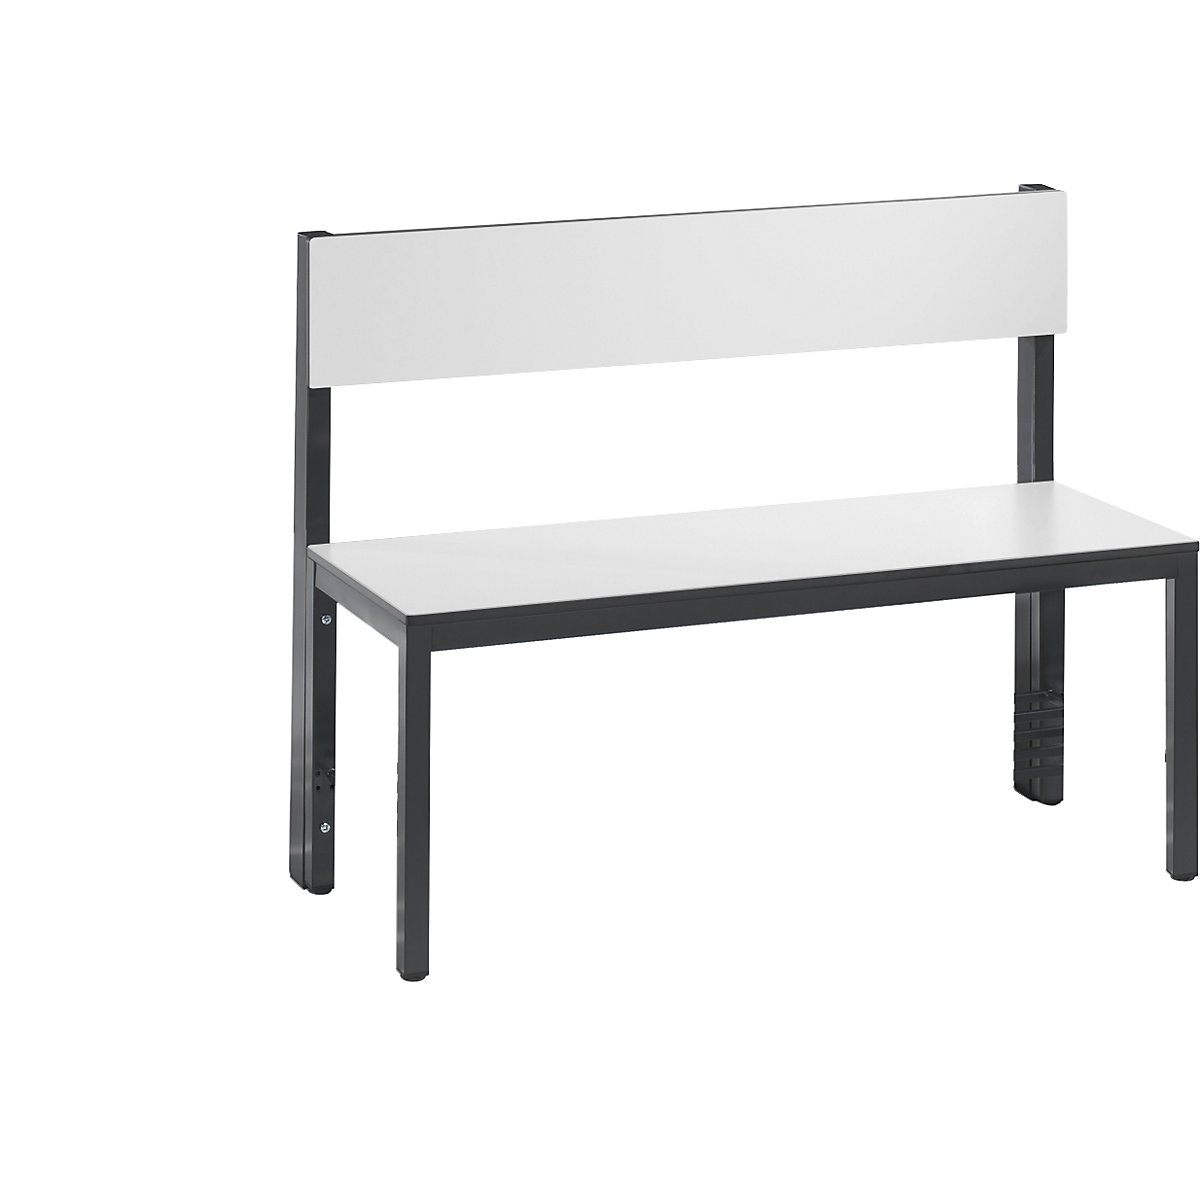 BASIC PLUS cloakroom bench, single sided – C+P